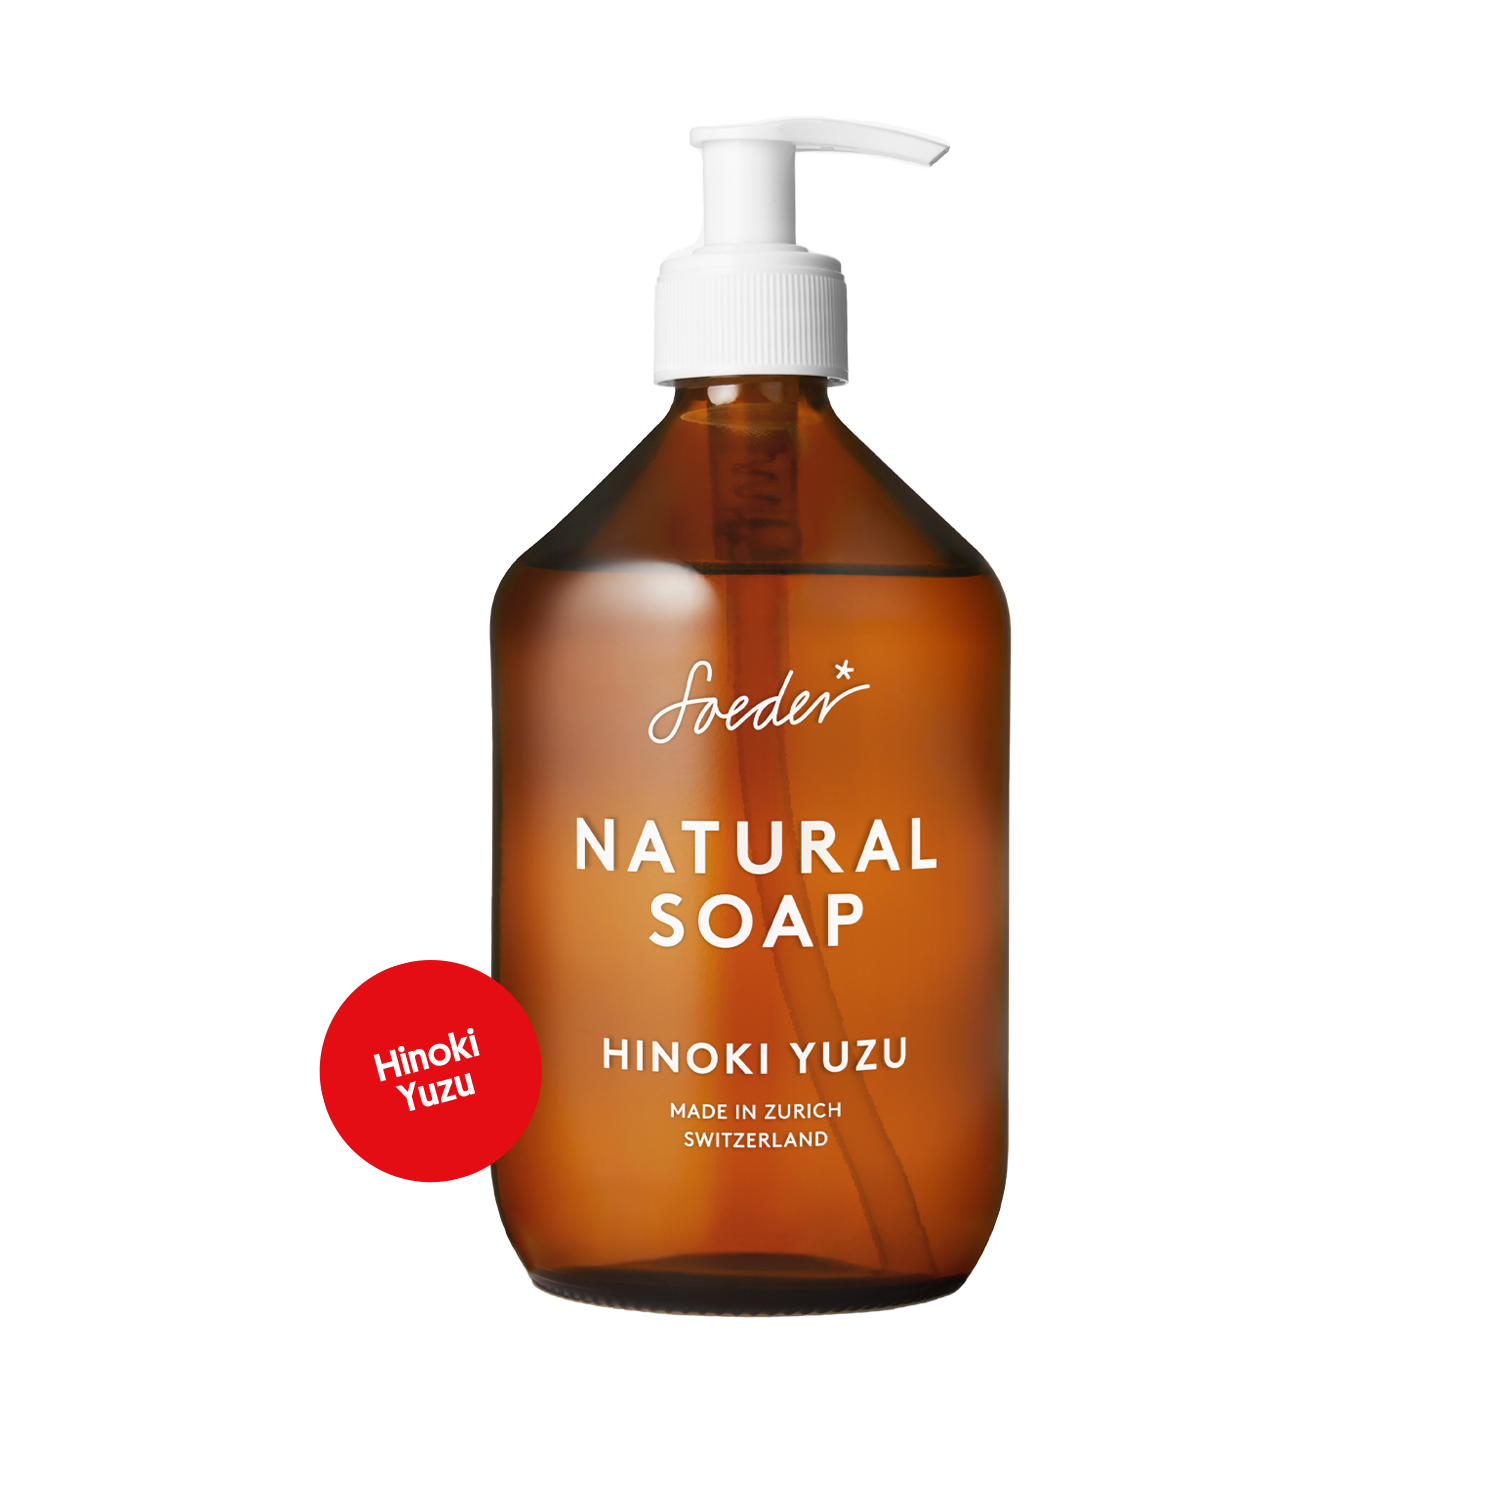 Natural Soap - Hinoki Yuzo 500 ml von soeder*